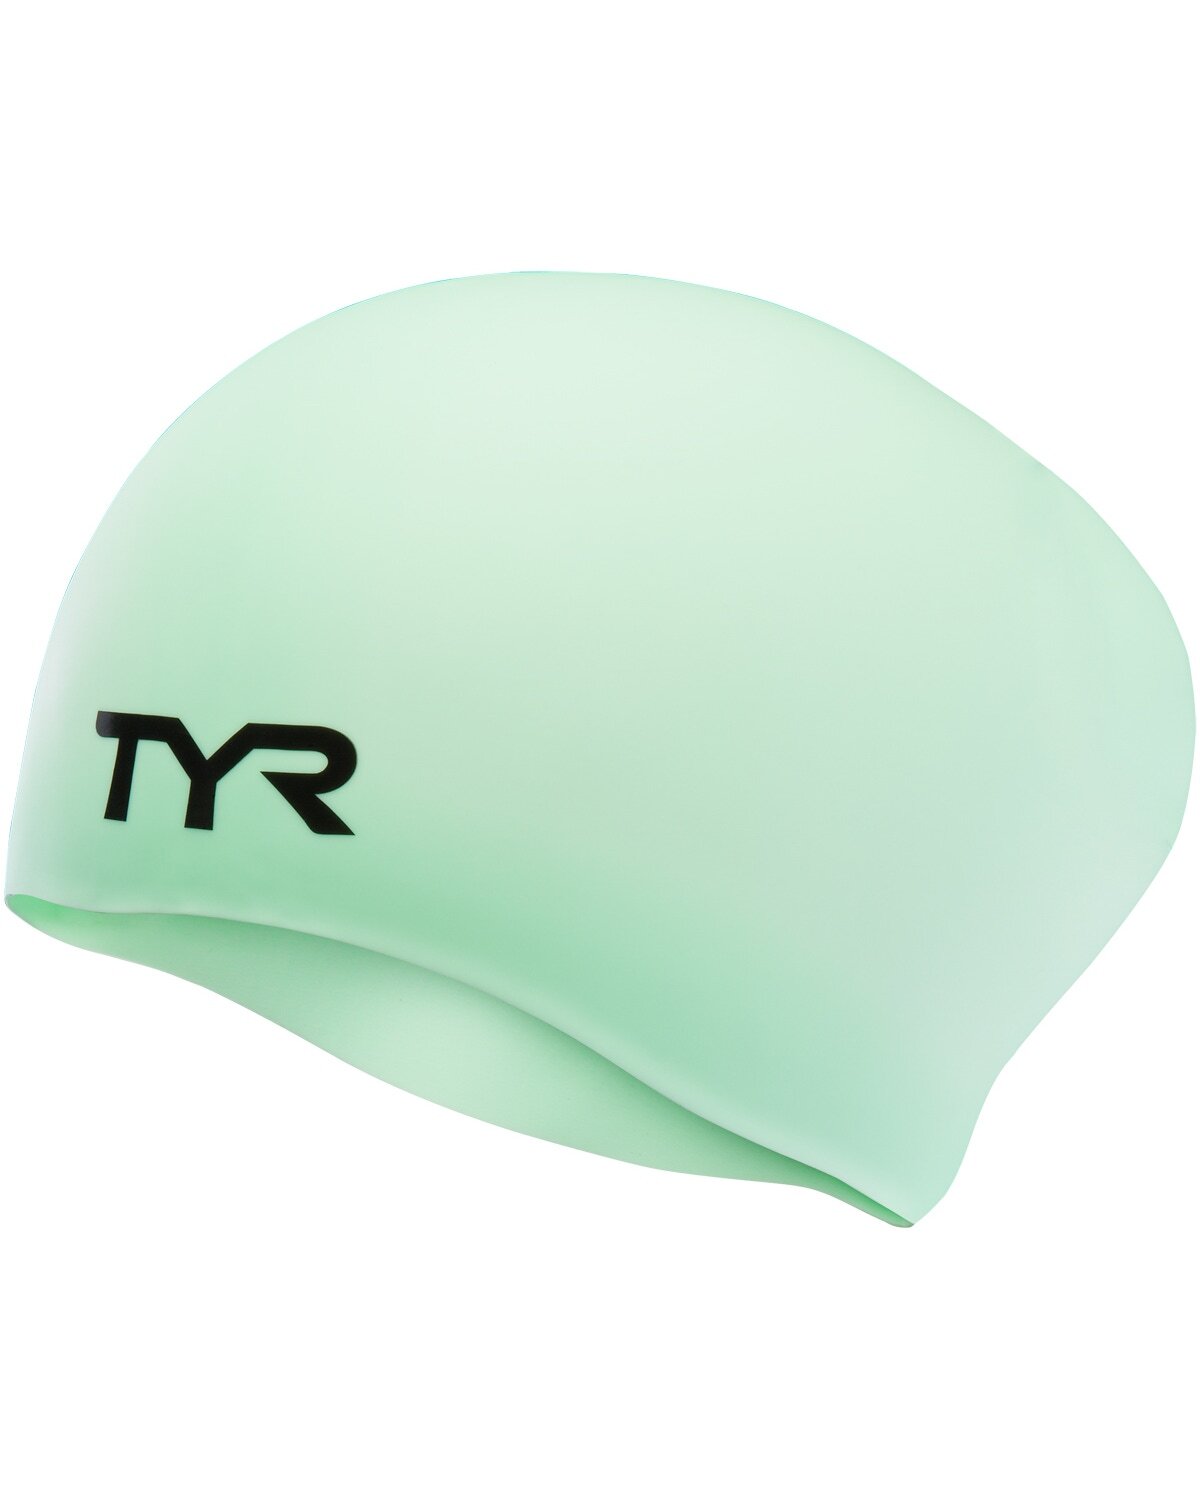 TYR Mint Long Hair Wrinkle Free Silicone Swim Cap